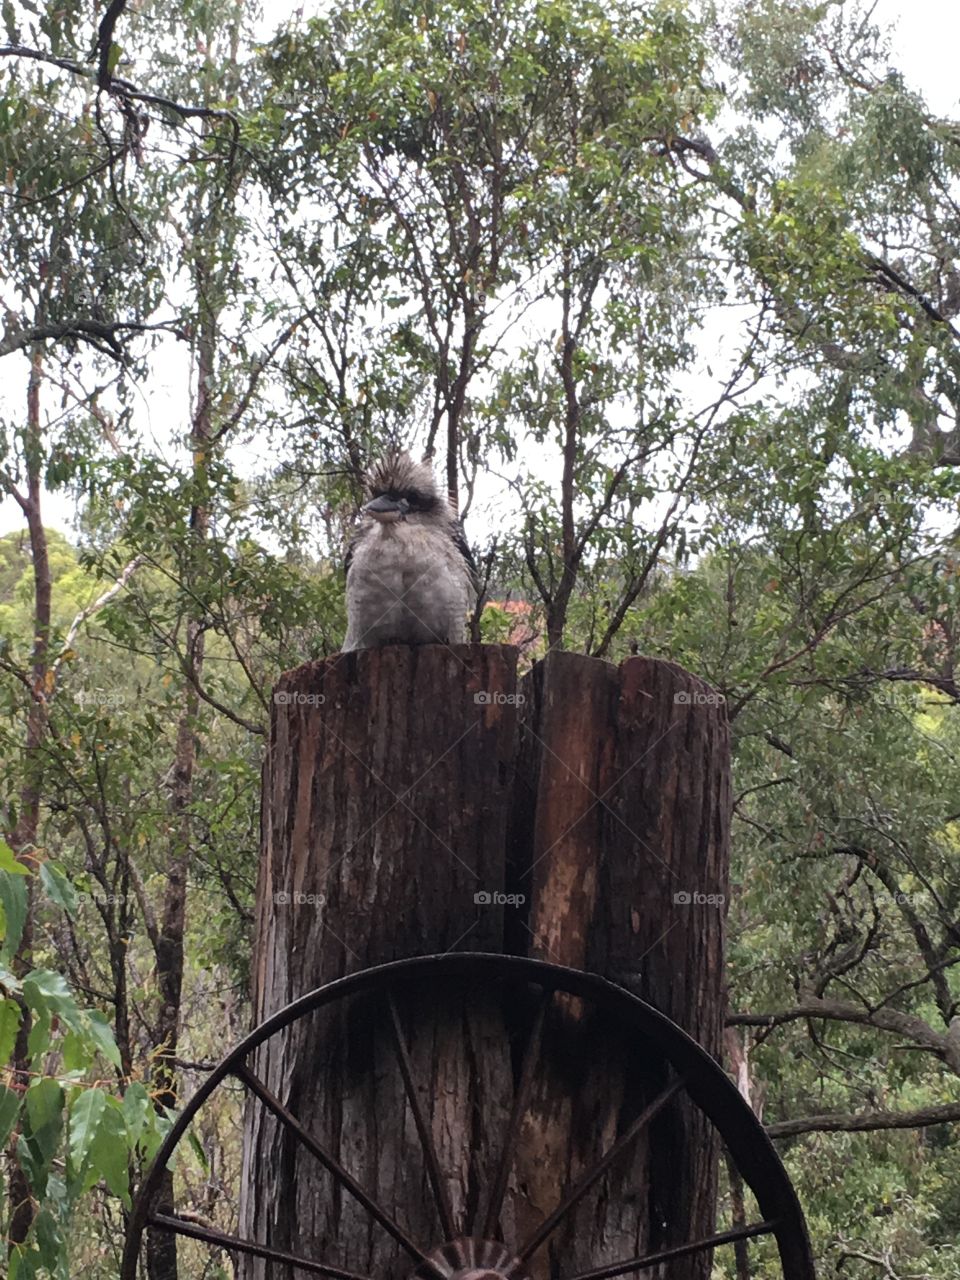 kookaburra sitting on a tree at Nanga bush camp.